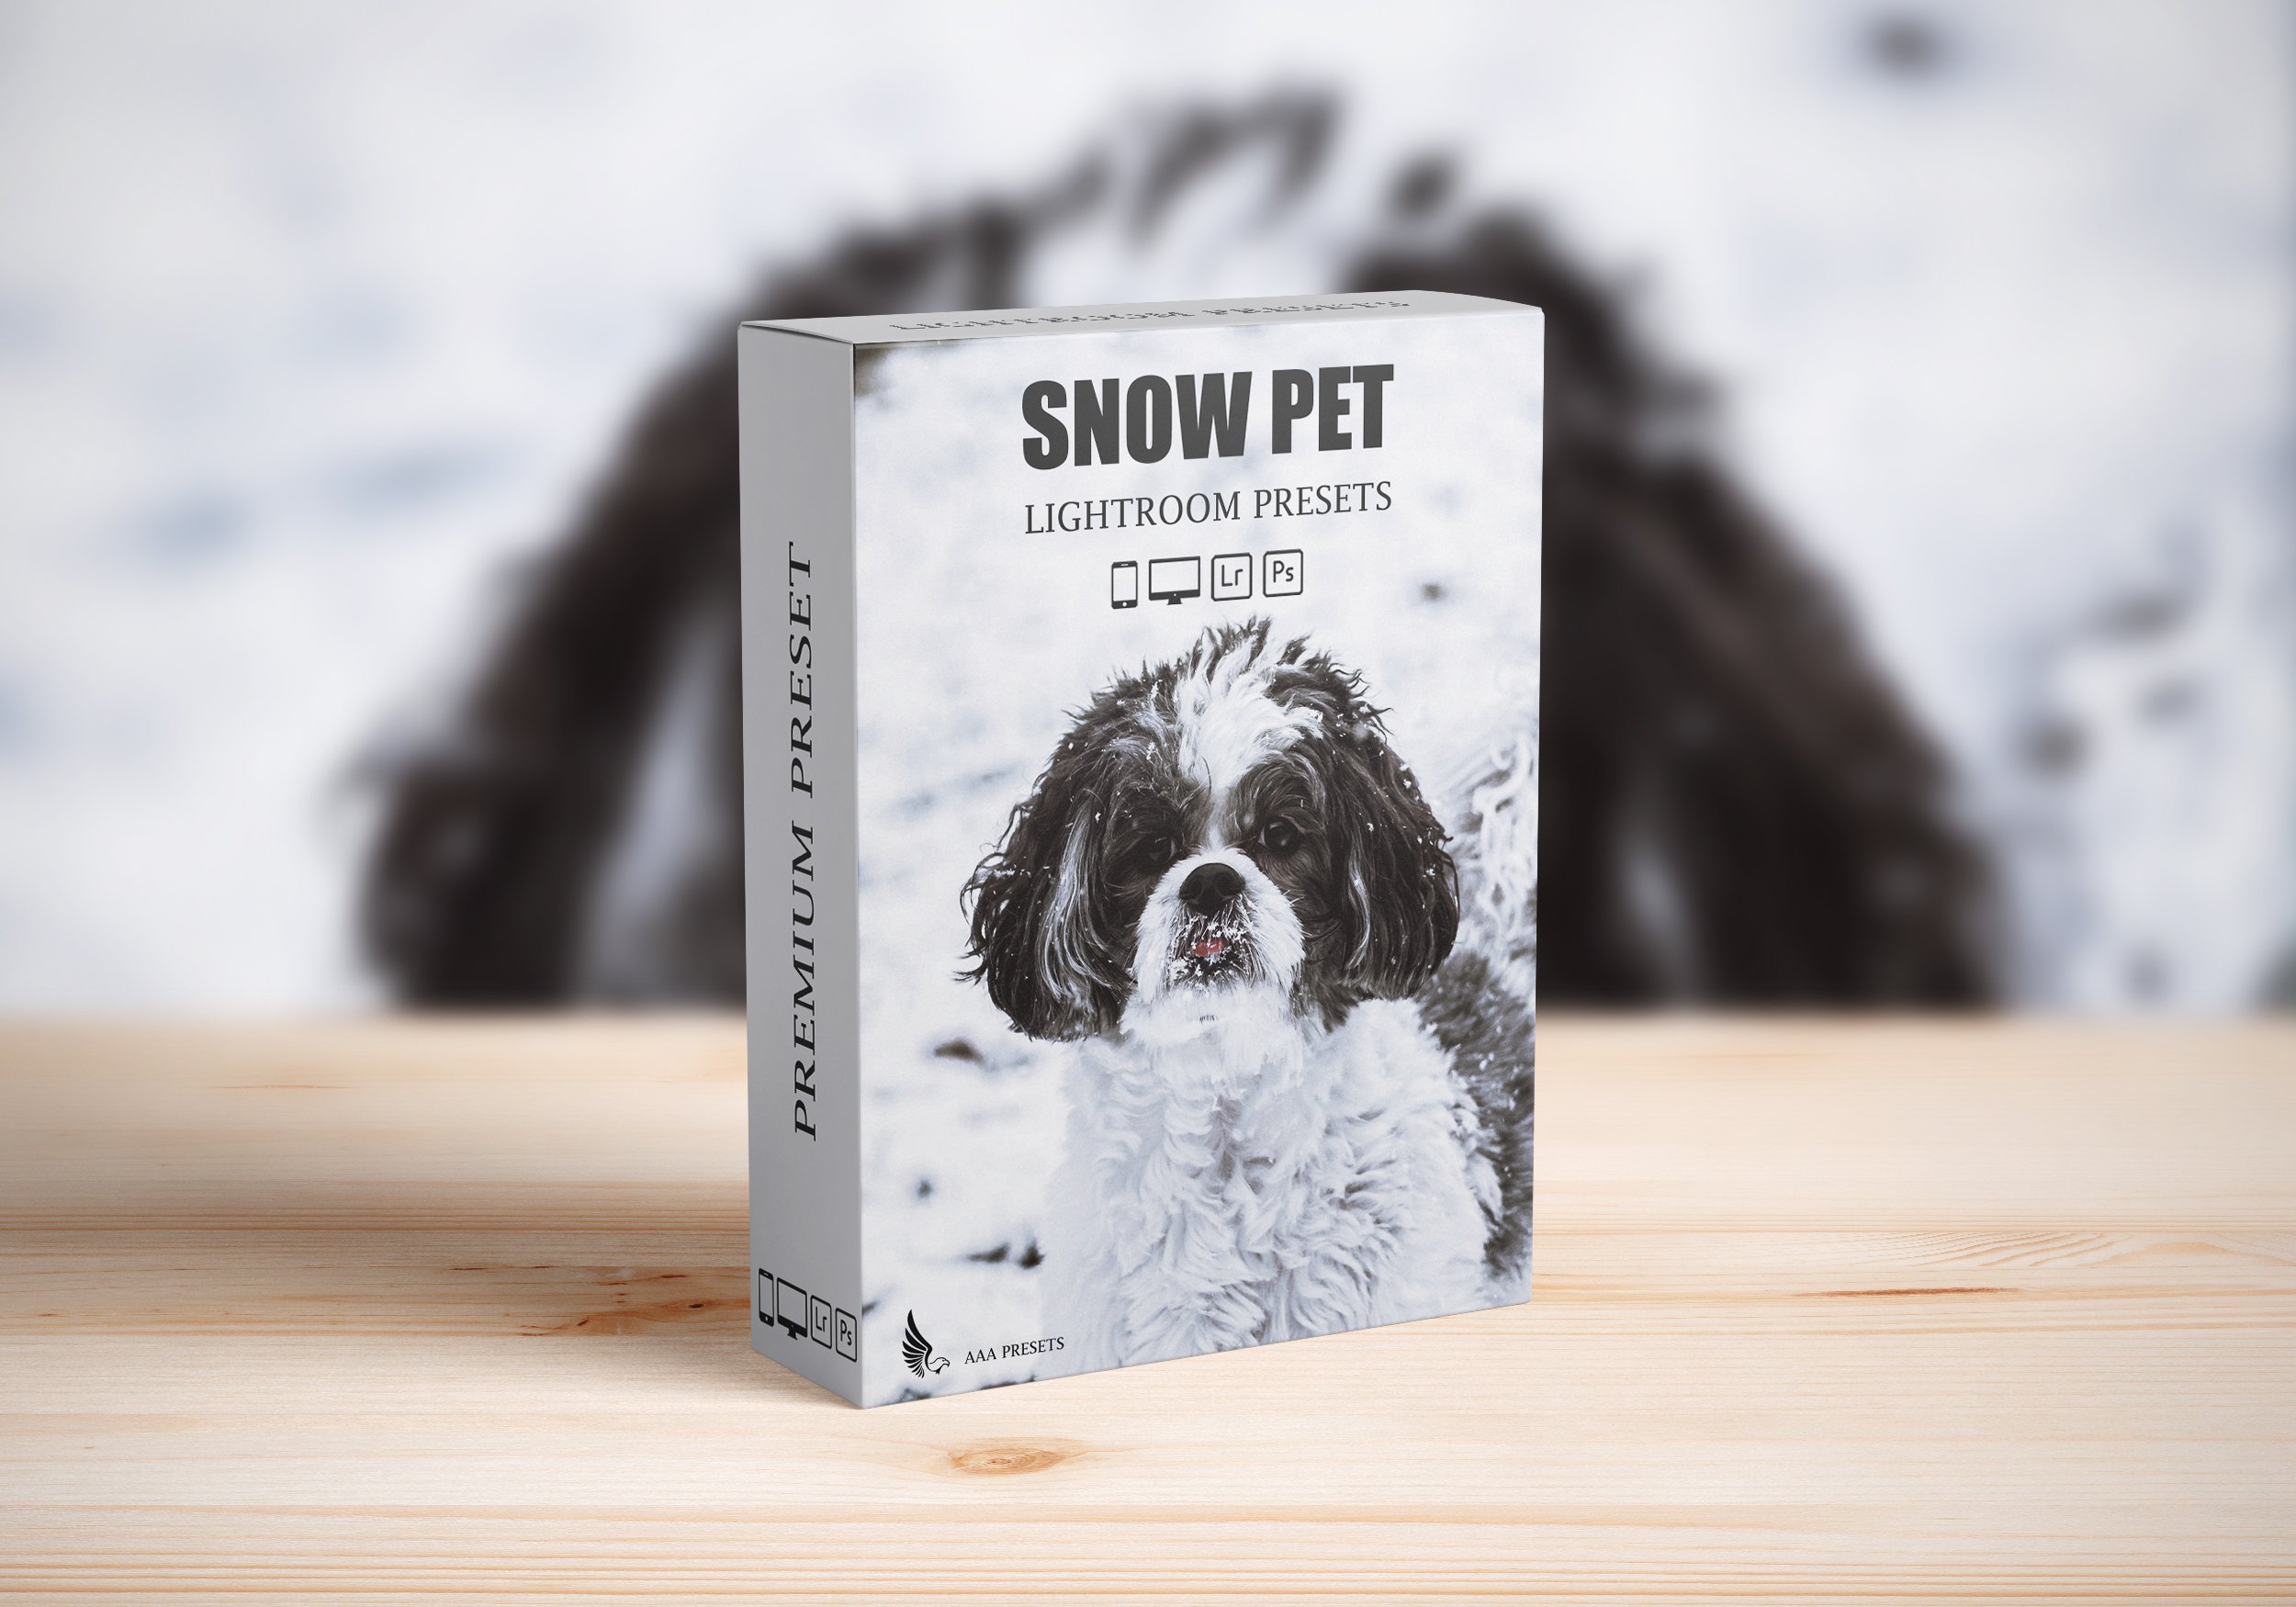 Snow Pet Lightroom Presetscover image.